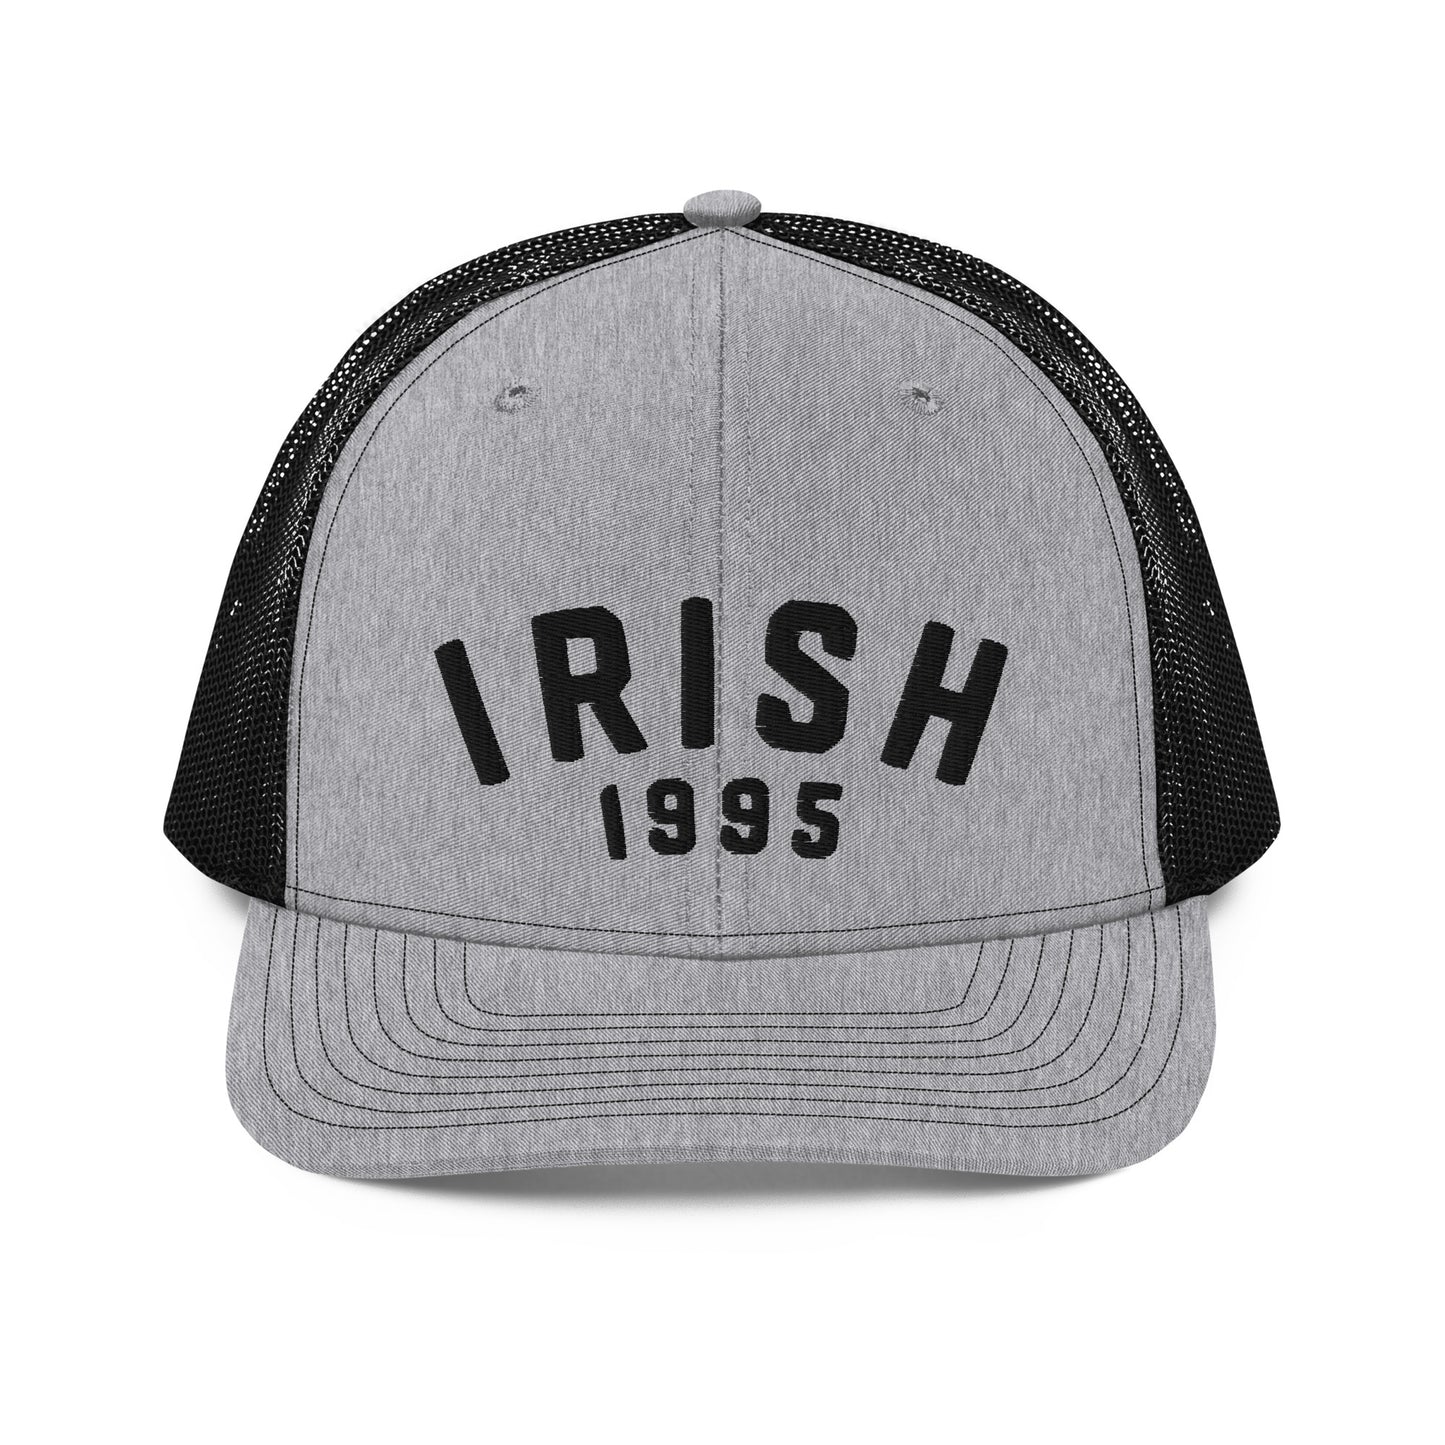 IRISH 1995 (arched)-Trucker Cap